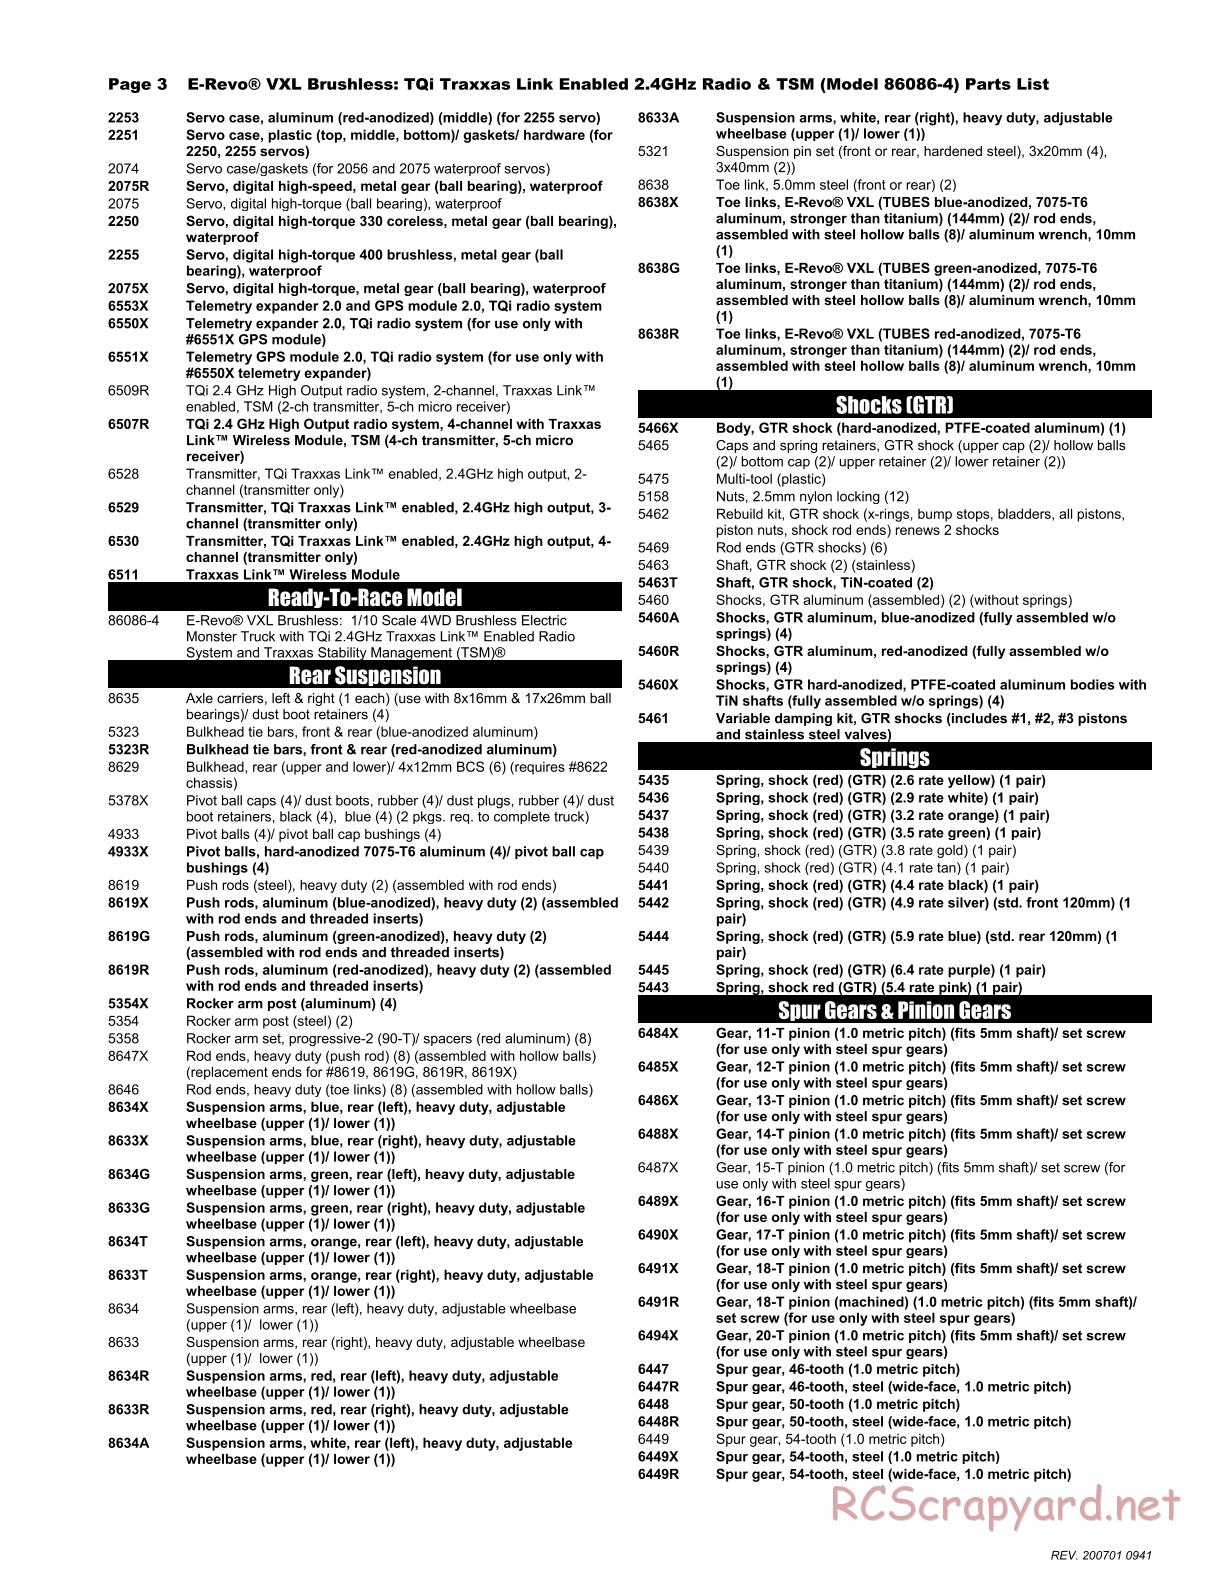 Traxxas - E-Revo VXL TSM (2018) - Parts List - Page 3